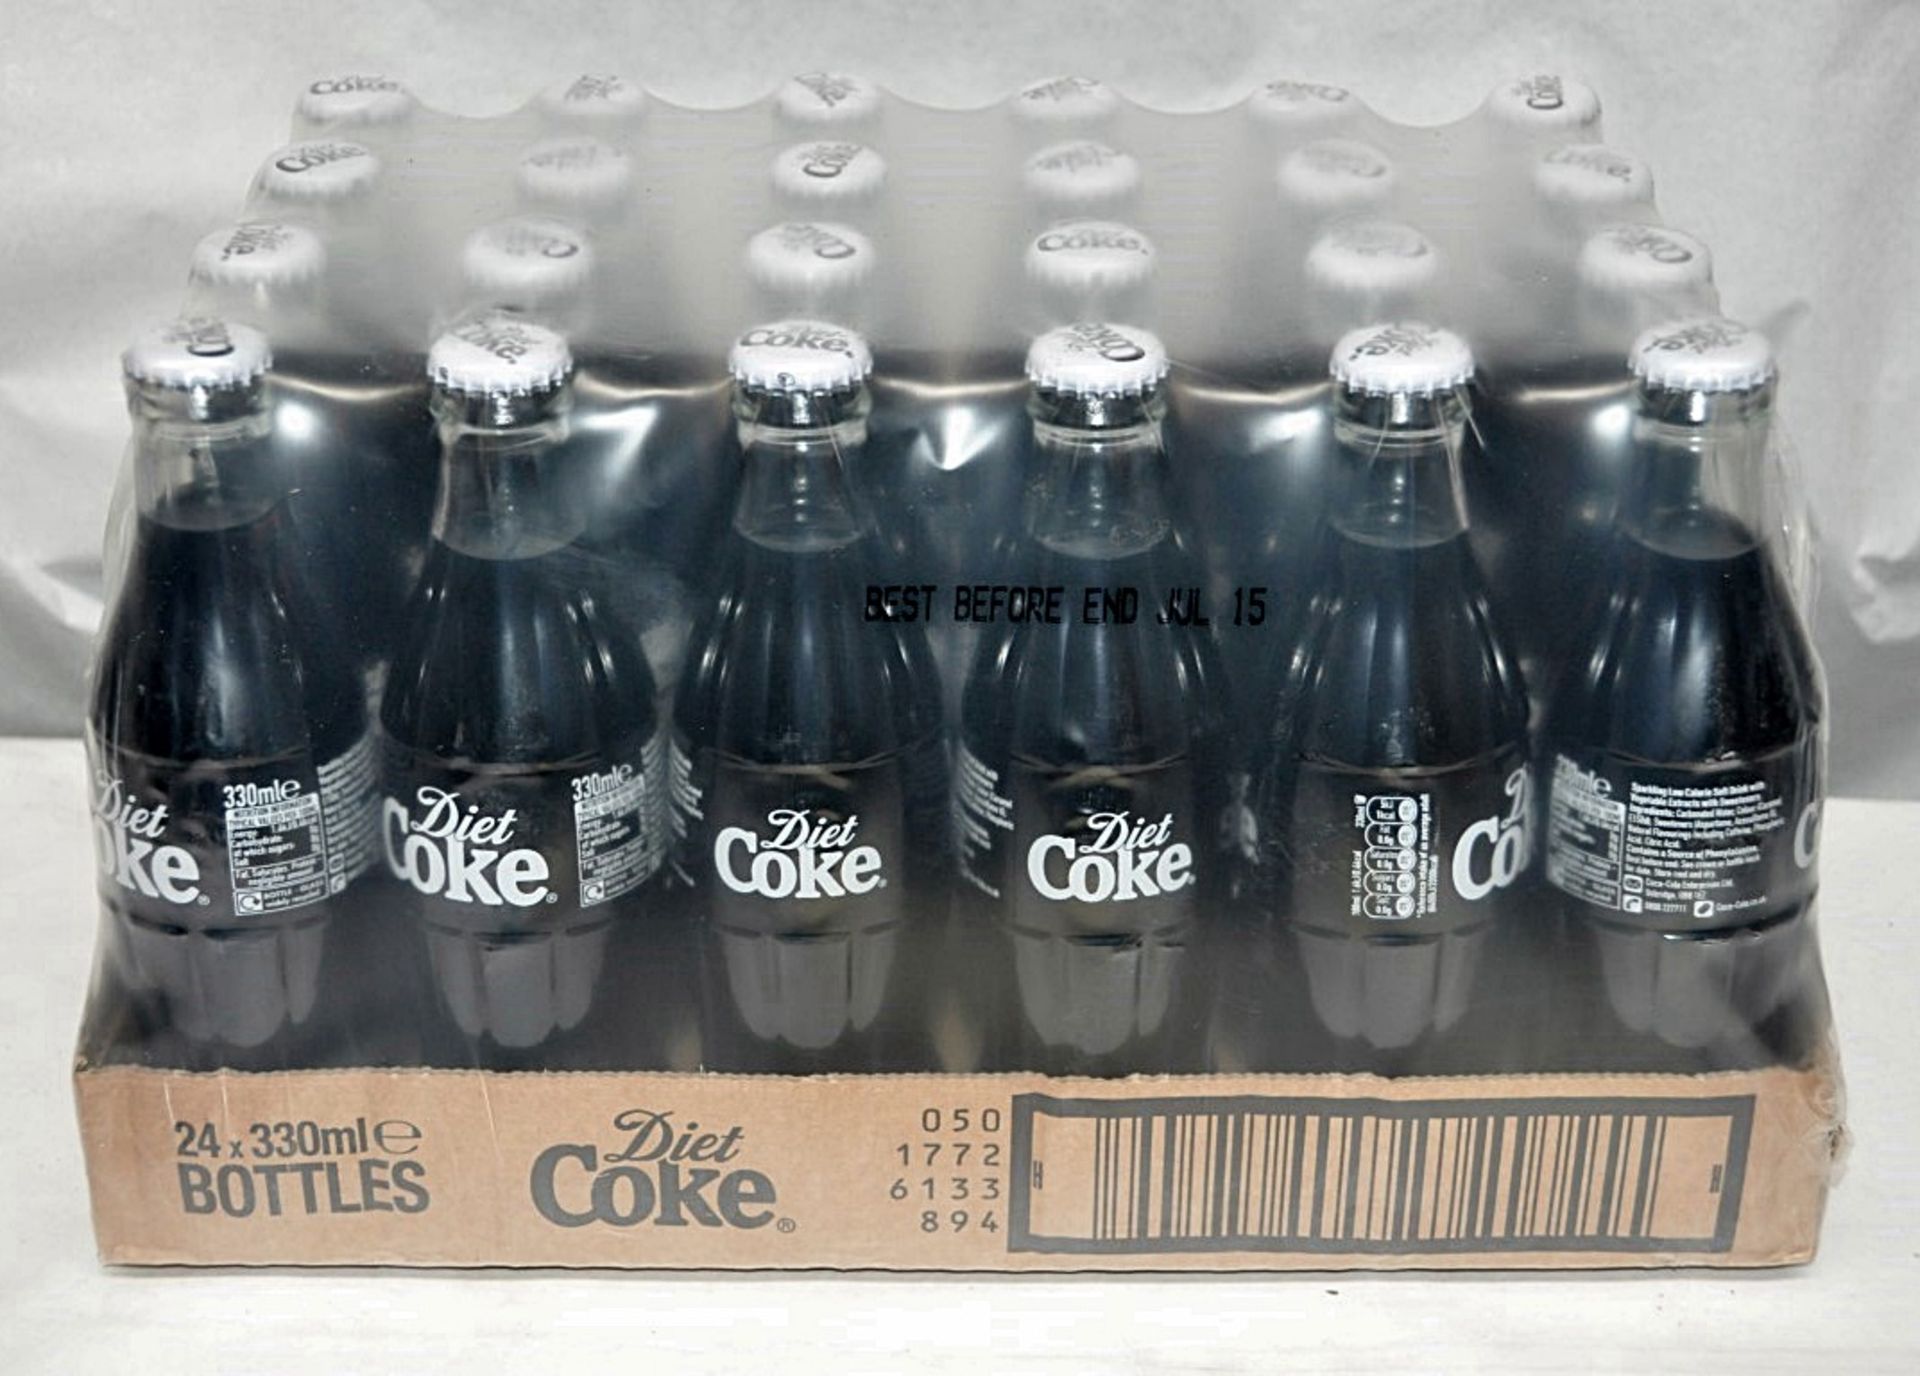 24 x Bottles of 330ml DIET Coca Cola - Full Case of Coke - Best Before Date July 2015 - Unused Stock